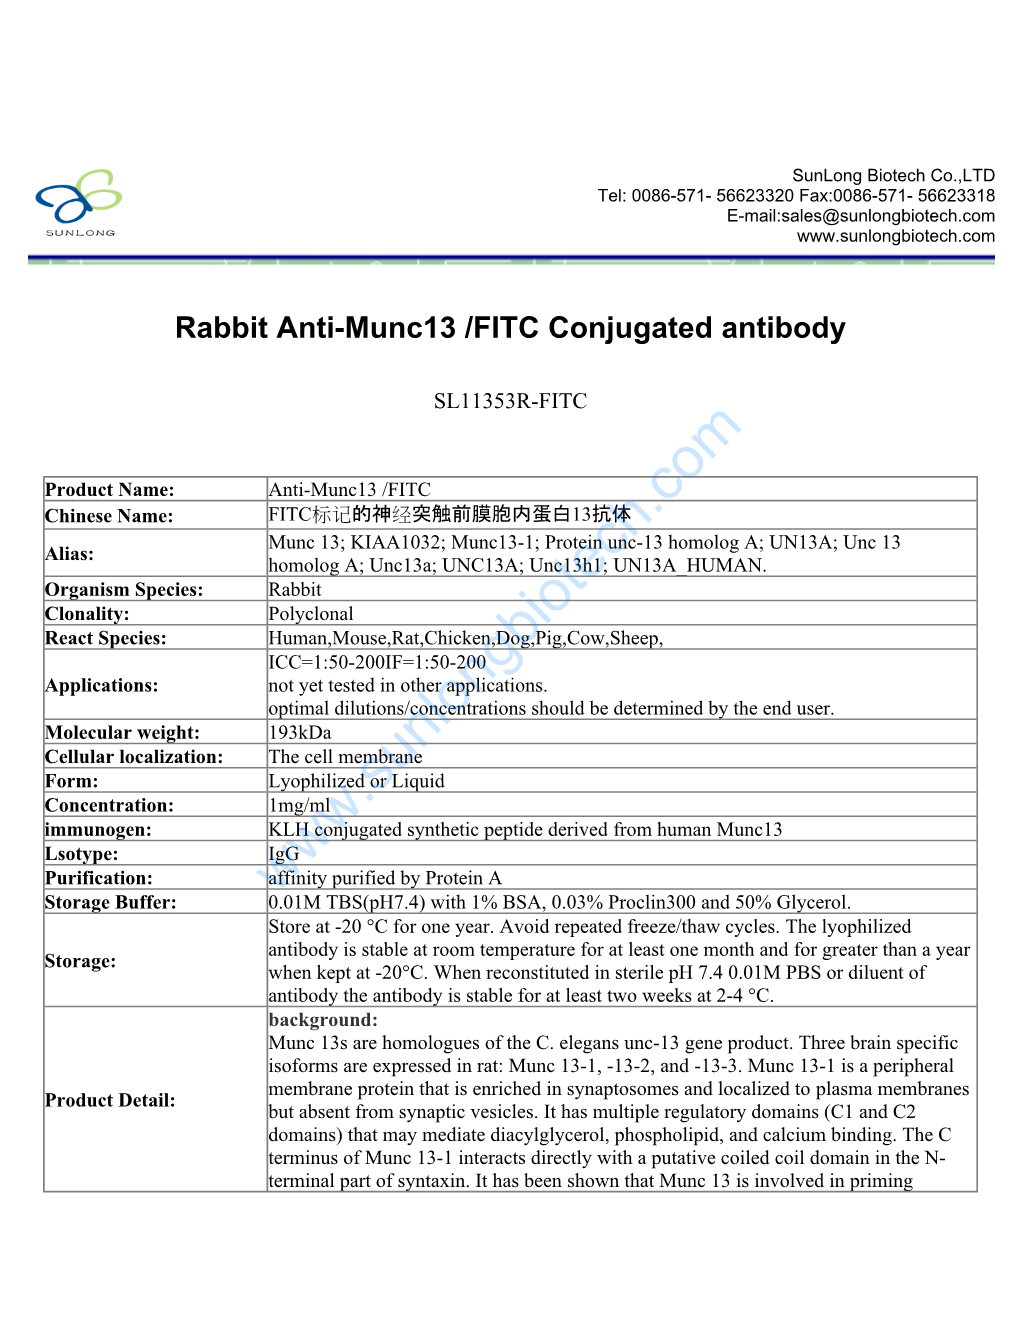 Rabbit Anti-Munc13 /FITC Conjugated Antibody